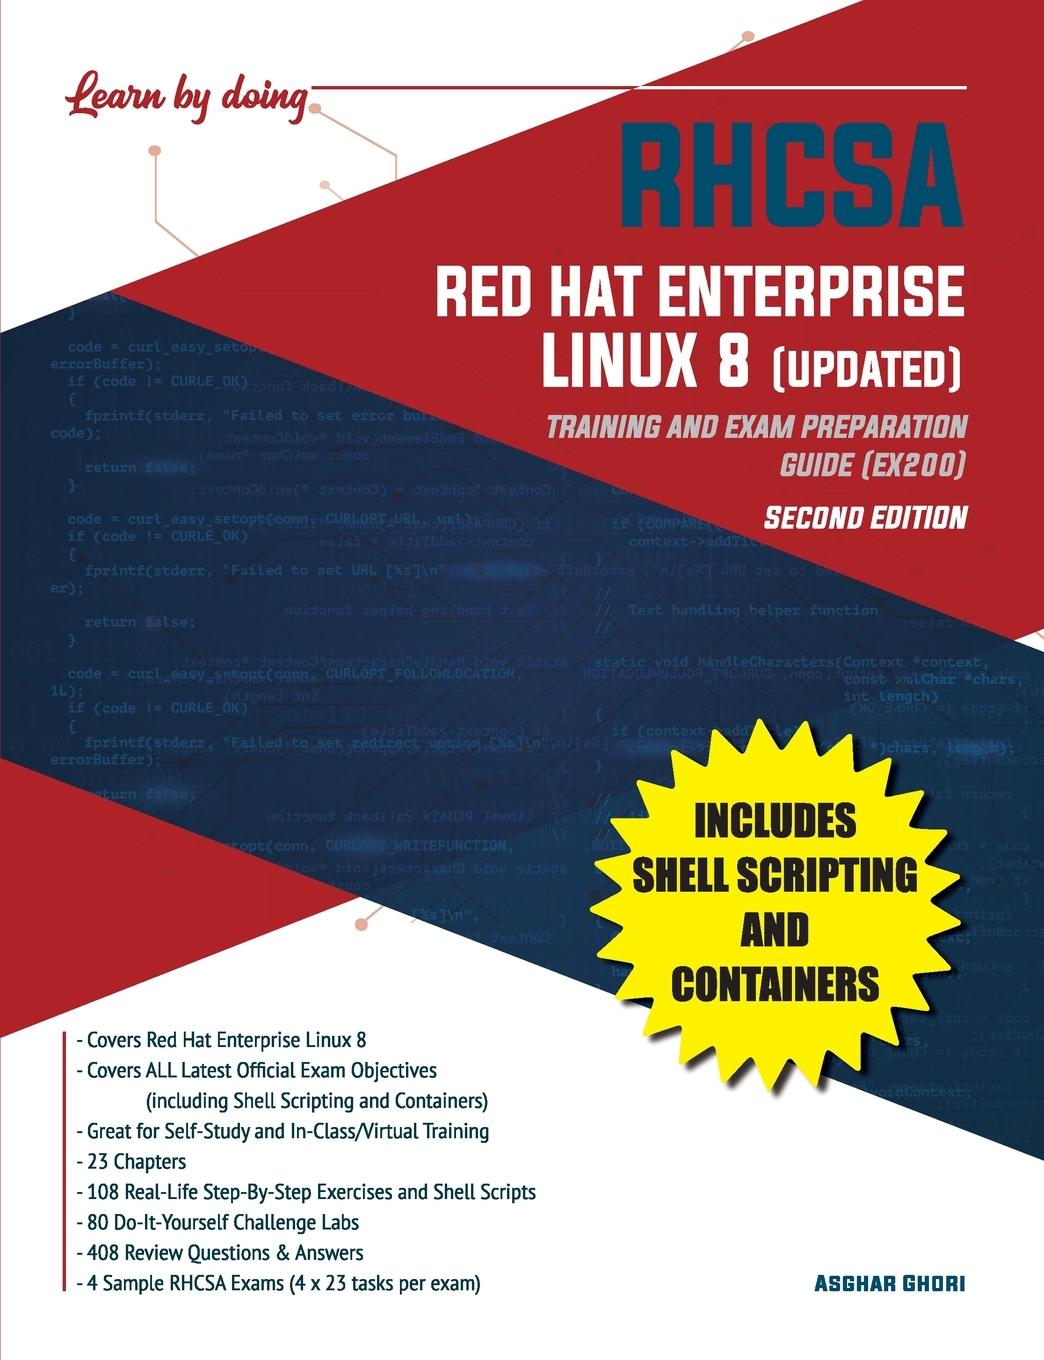 Kniha RHCSA Red Hat Enterprise Linux 8 (UPDATED) 